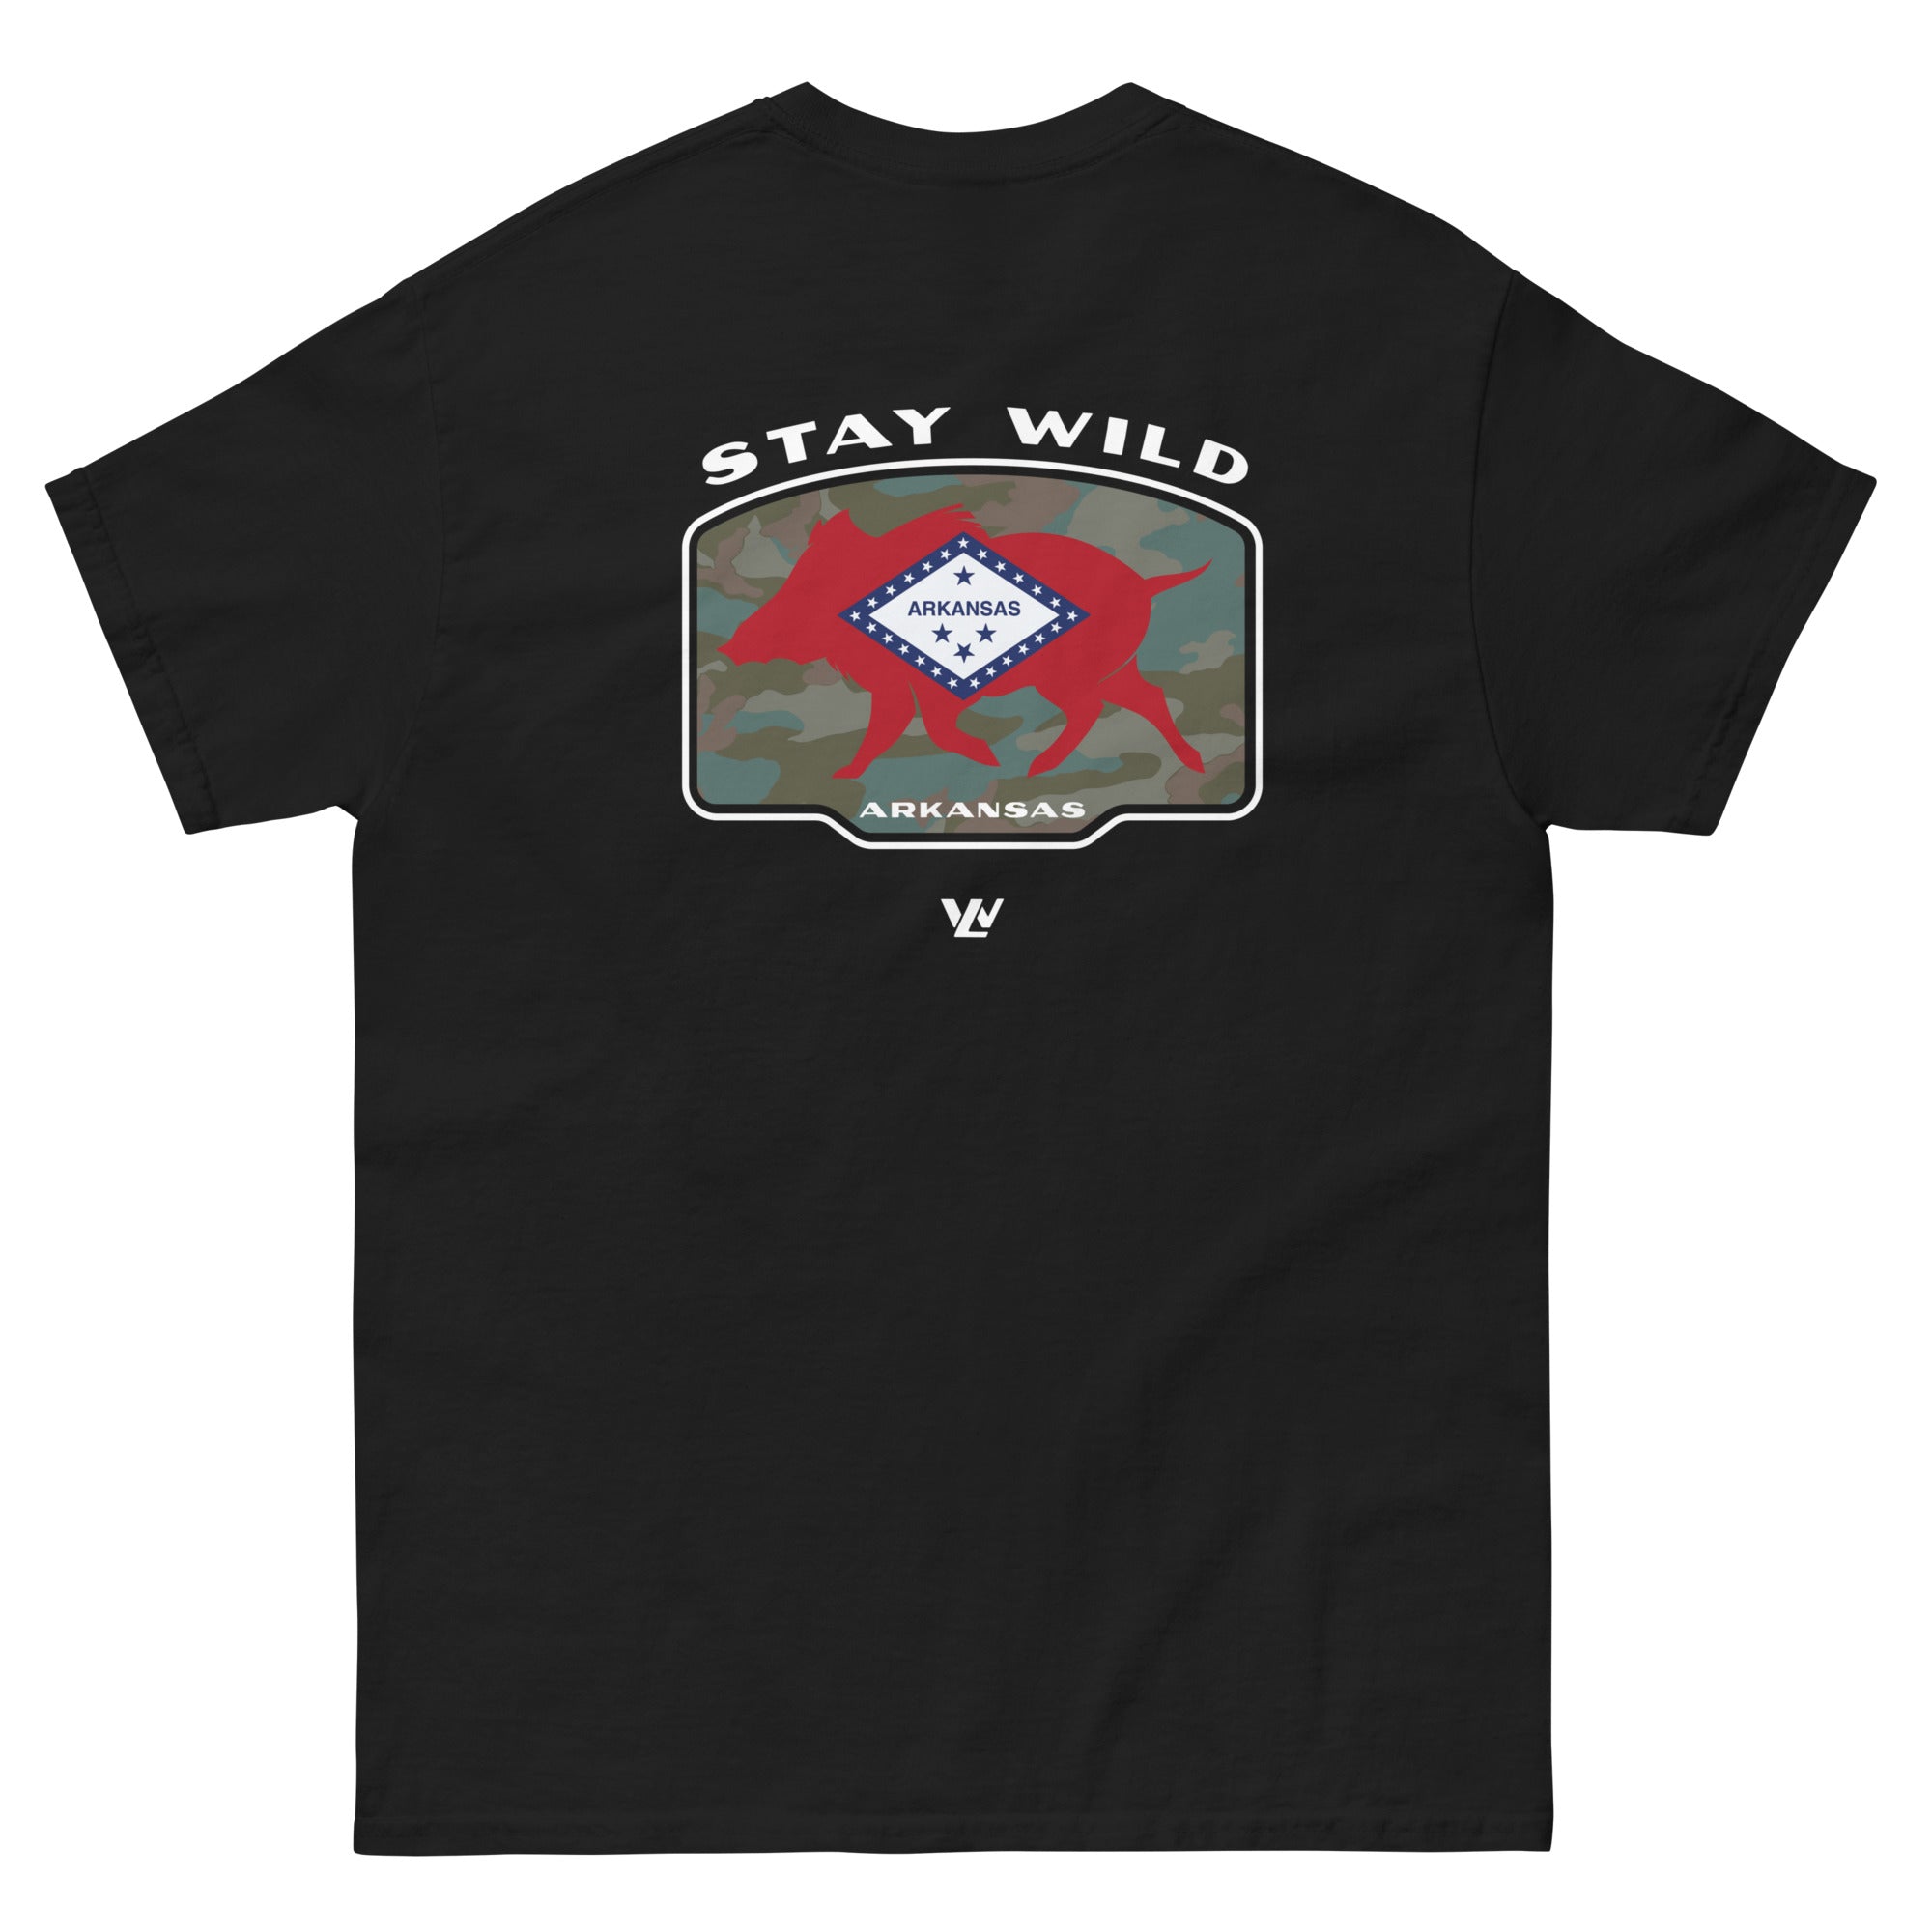 Stay Wild Arkansas T-Shirt - Wilding Life